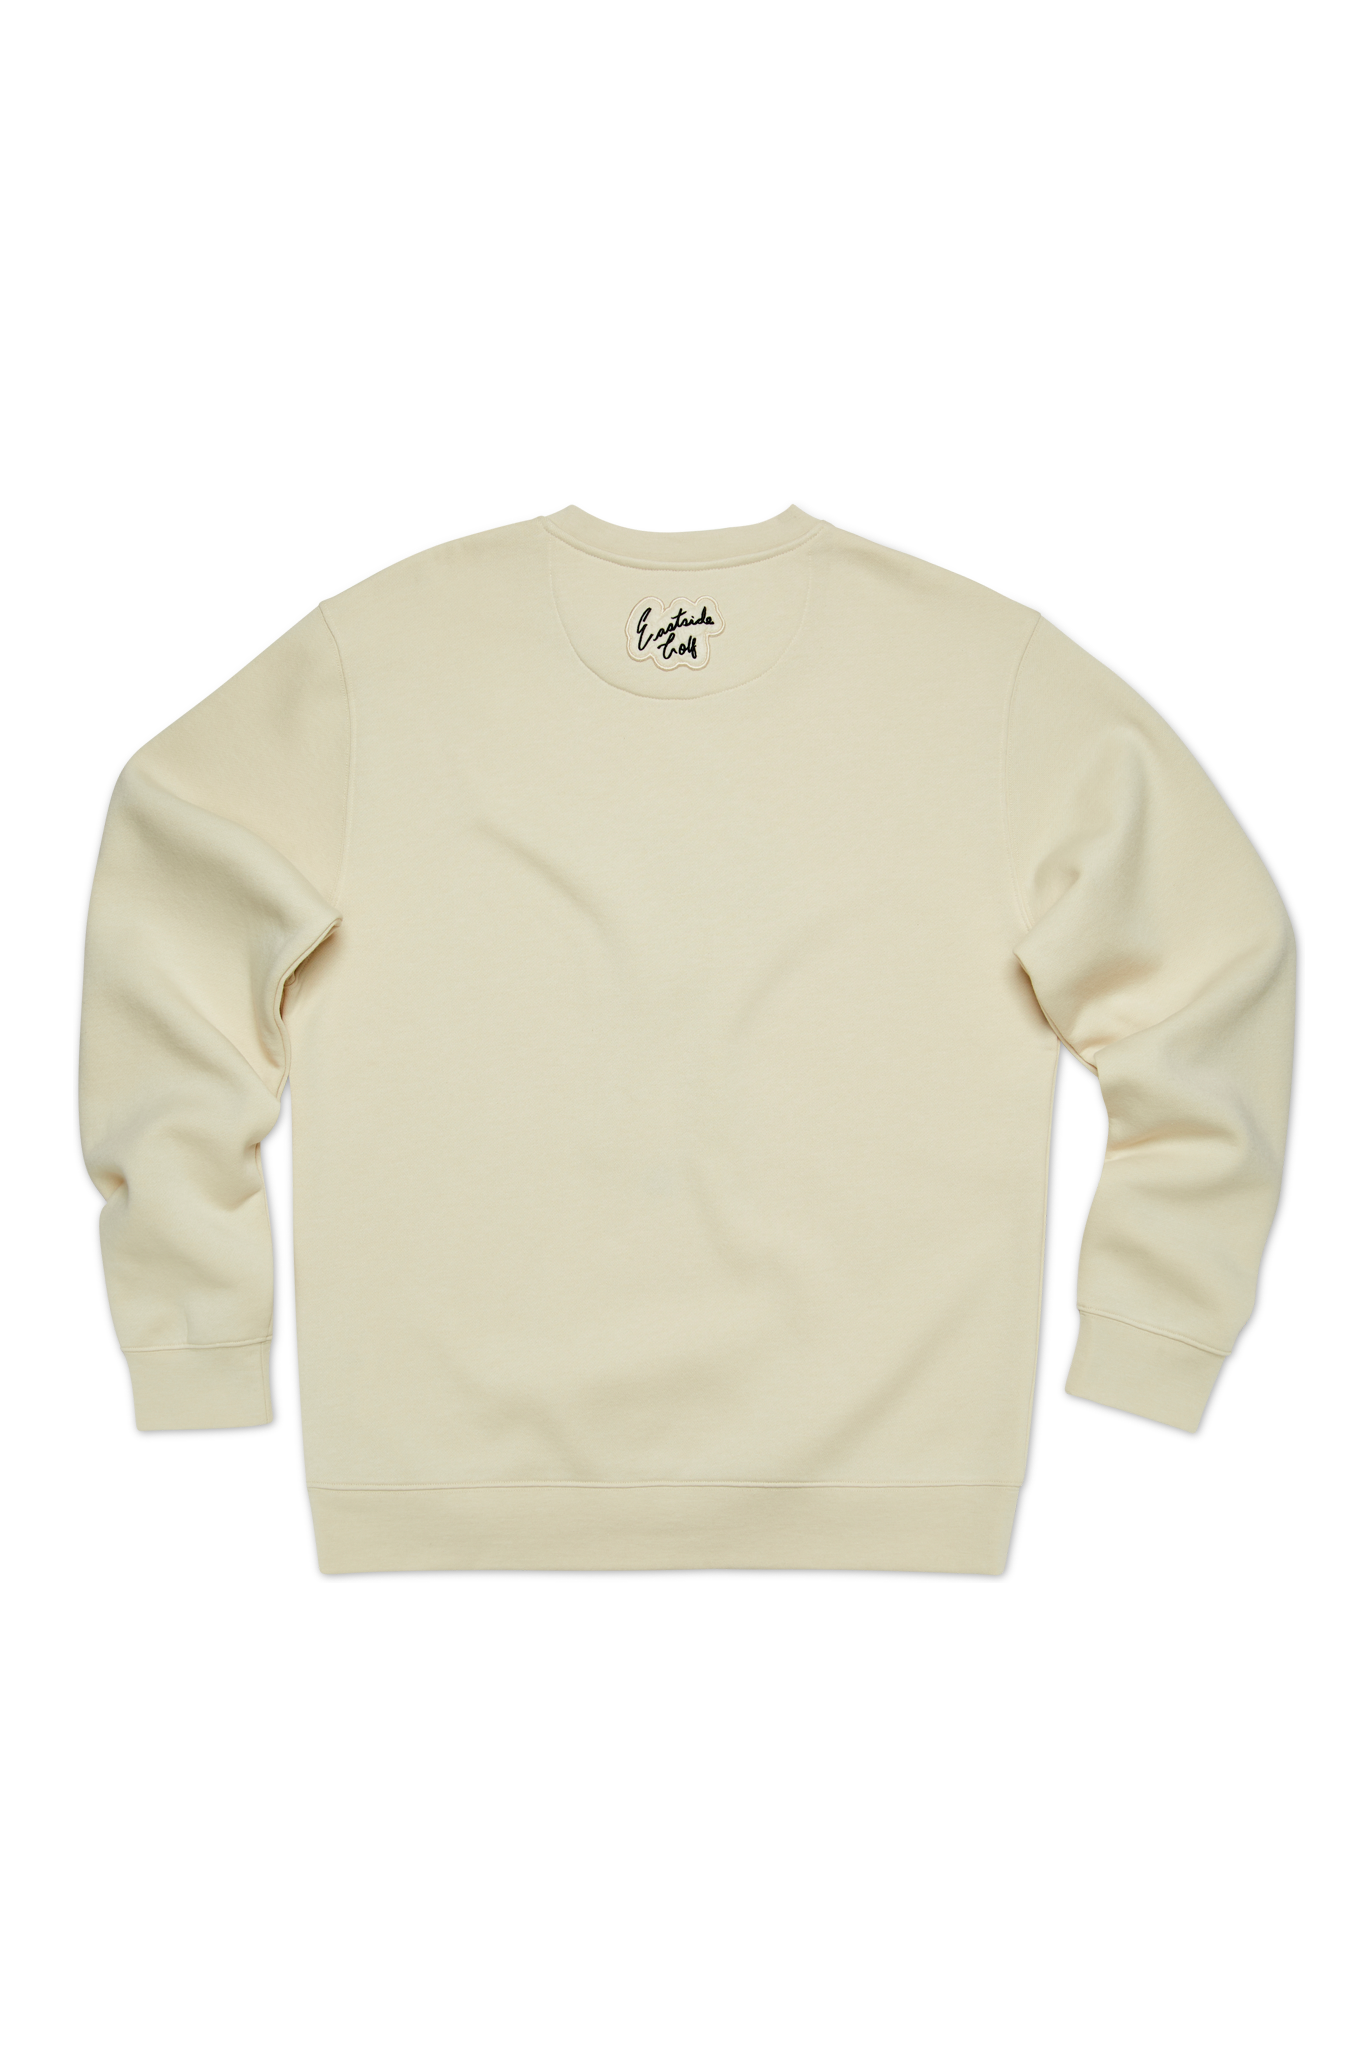 Eastside Golf Men's Core Sweatshirt Pearled Ivory